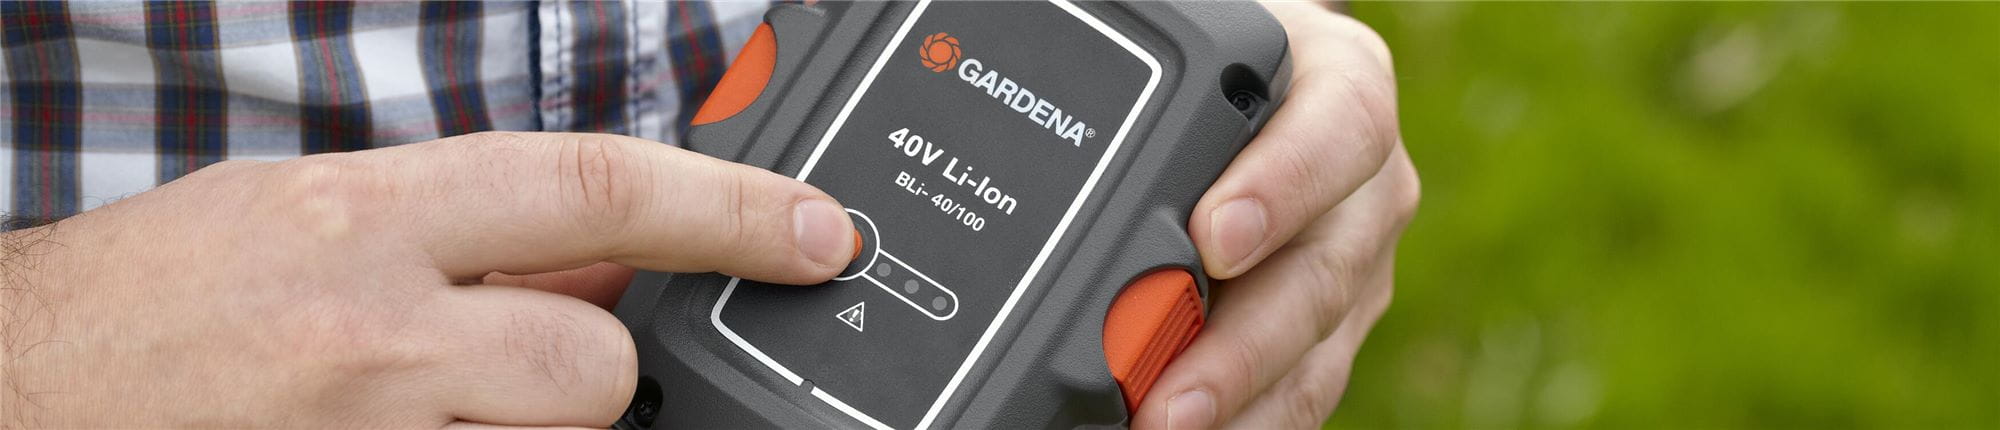 40 volt GARDENA System Battery